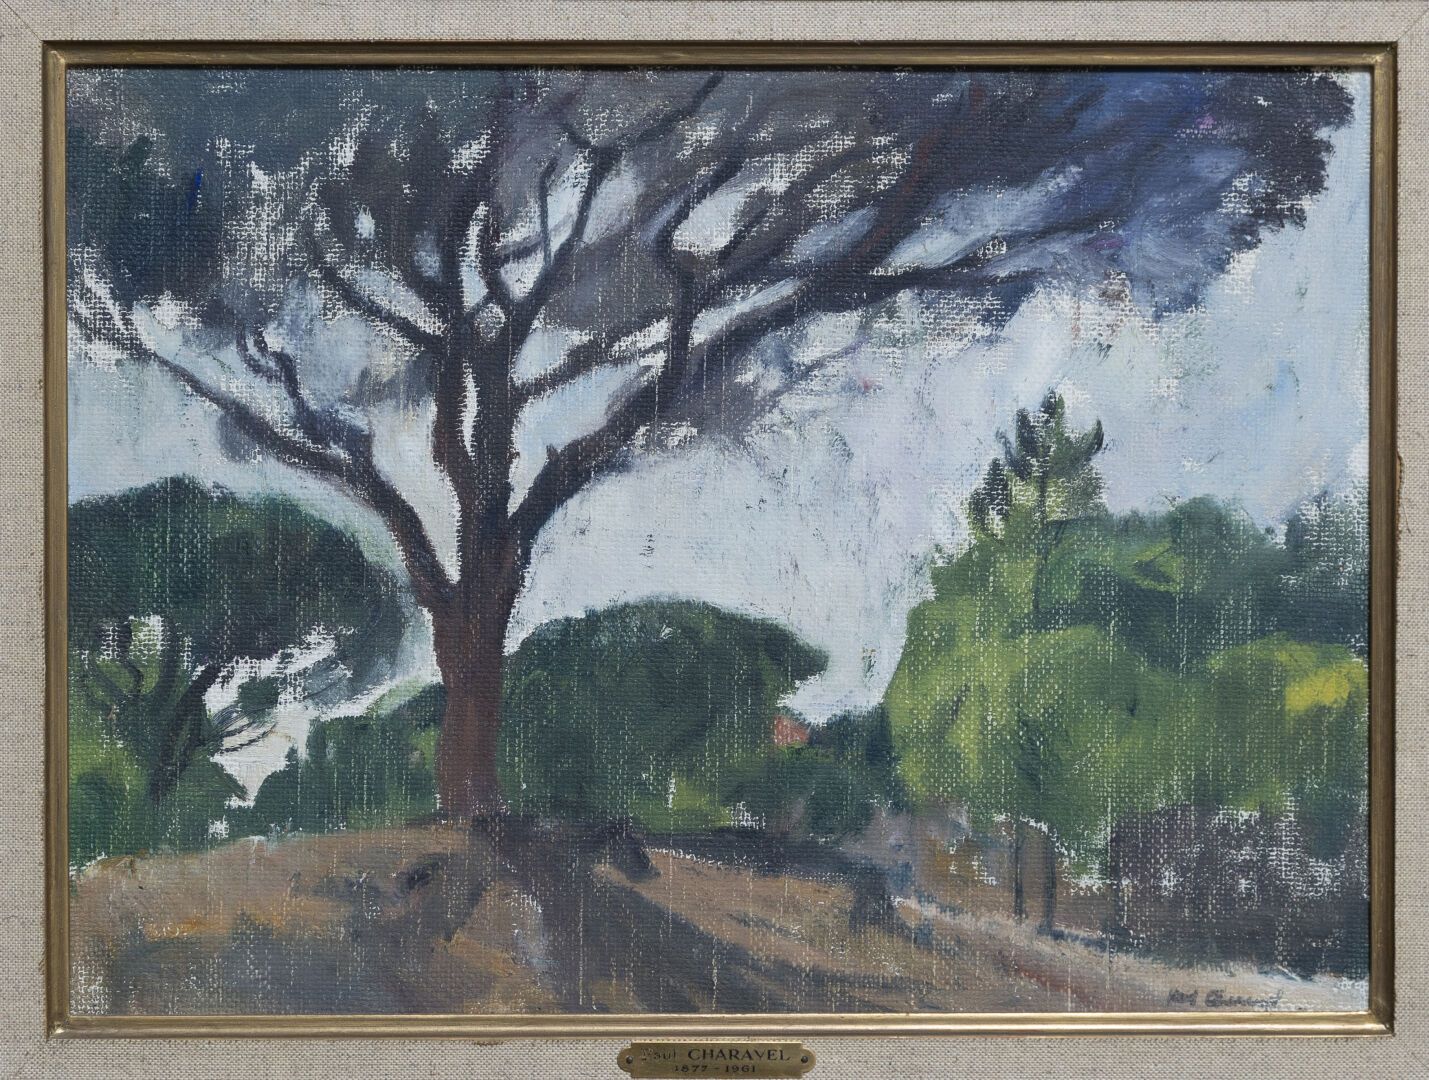 Null Paul CHARAVEL (1877-1961)

景观

板面油画，右下角有签名

30.5 x 41.5厘米